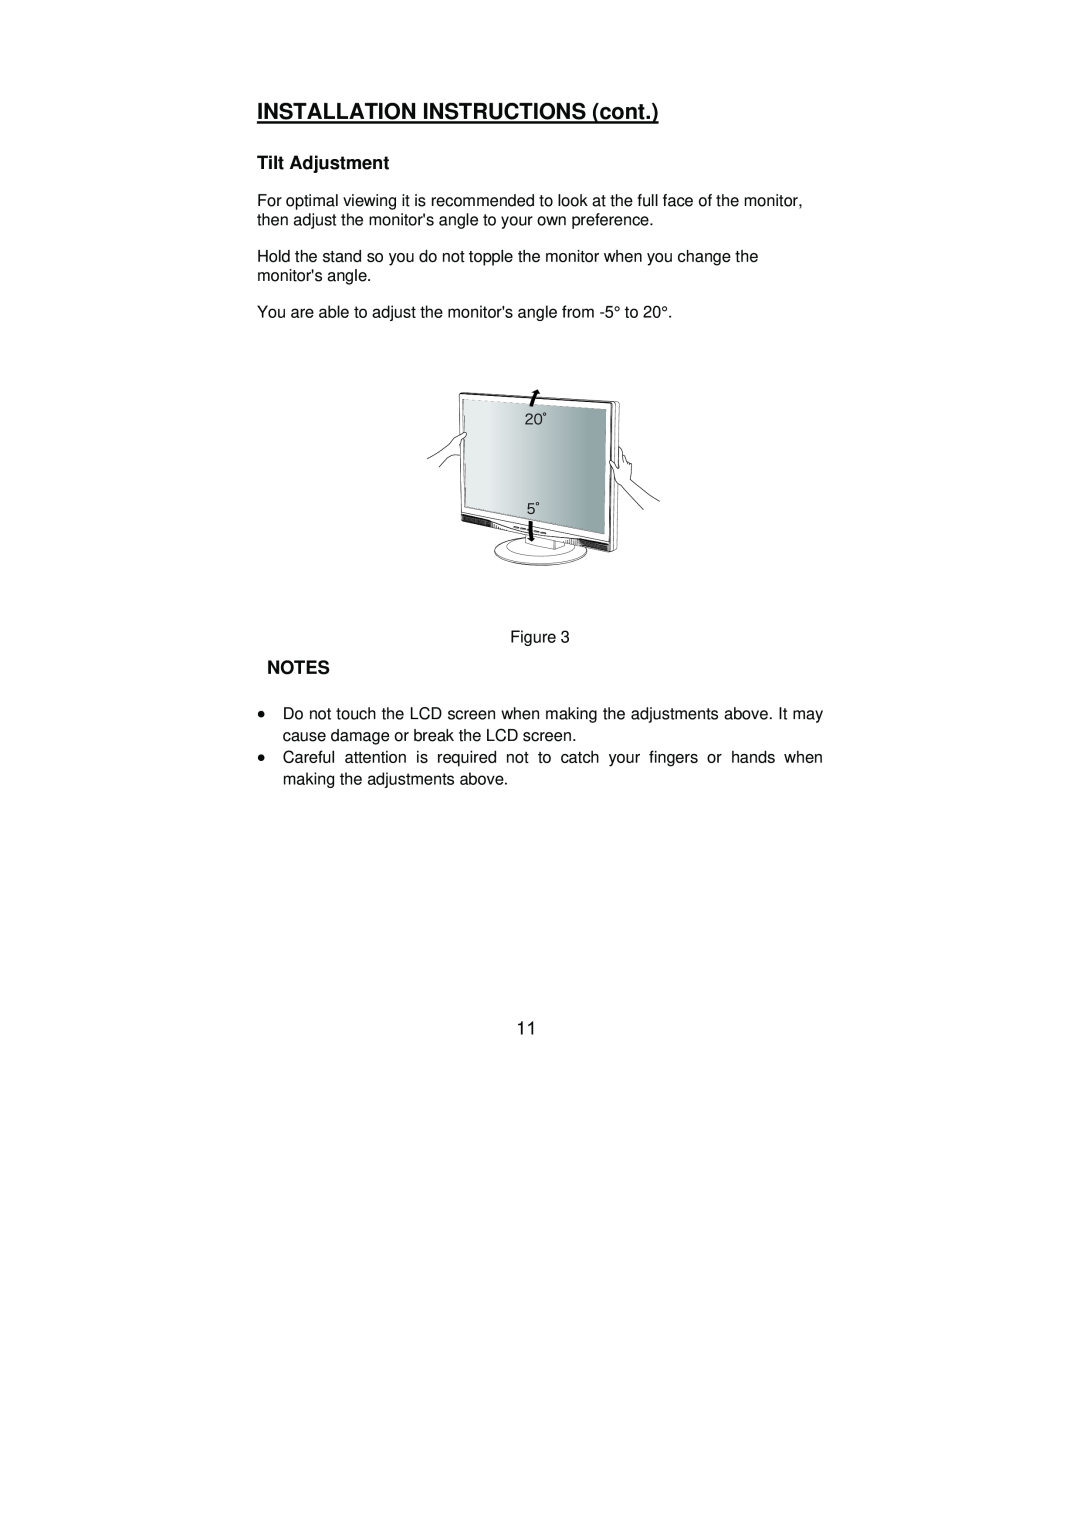 Planar PX2210MW manual INSTALLATION INSTRUCTIONS cont, Tilt Adjustment 